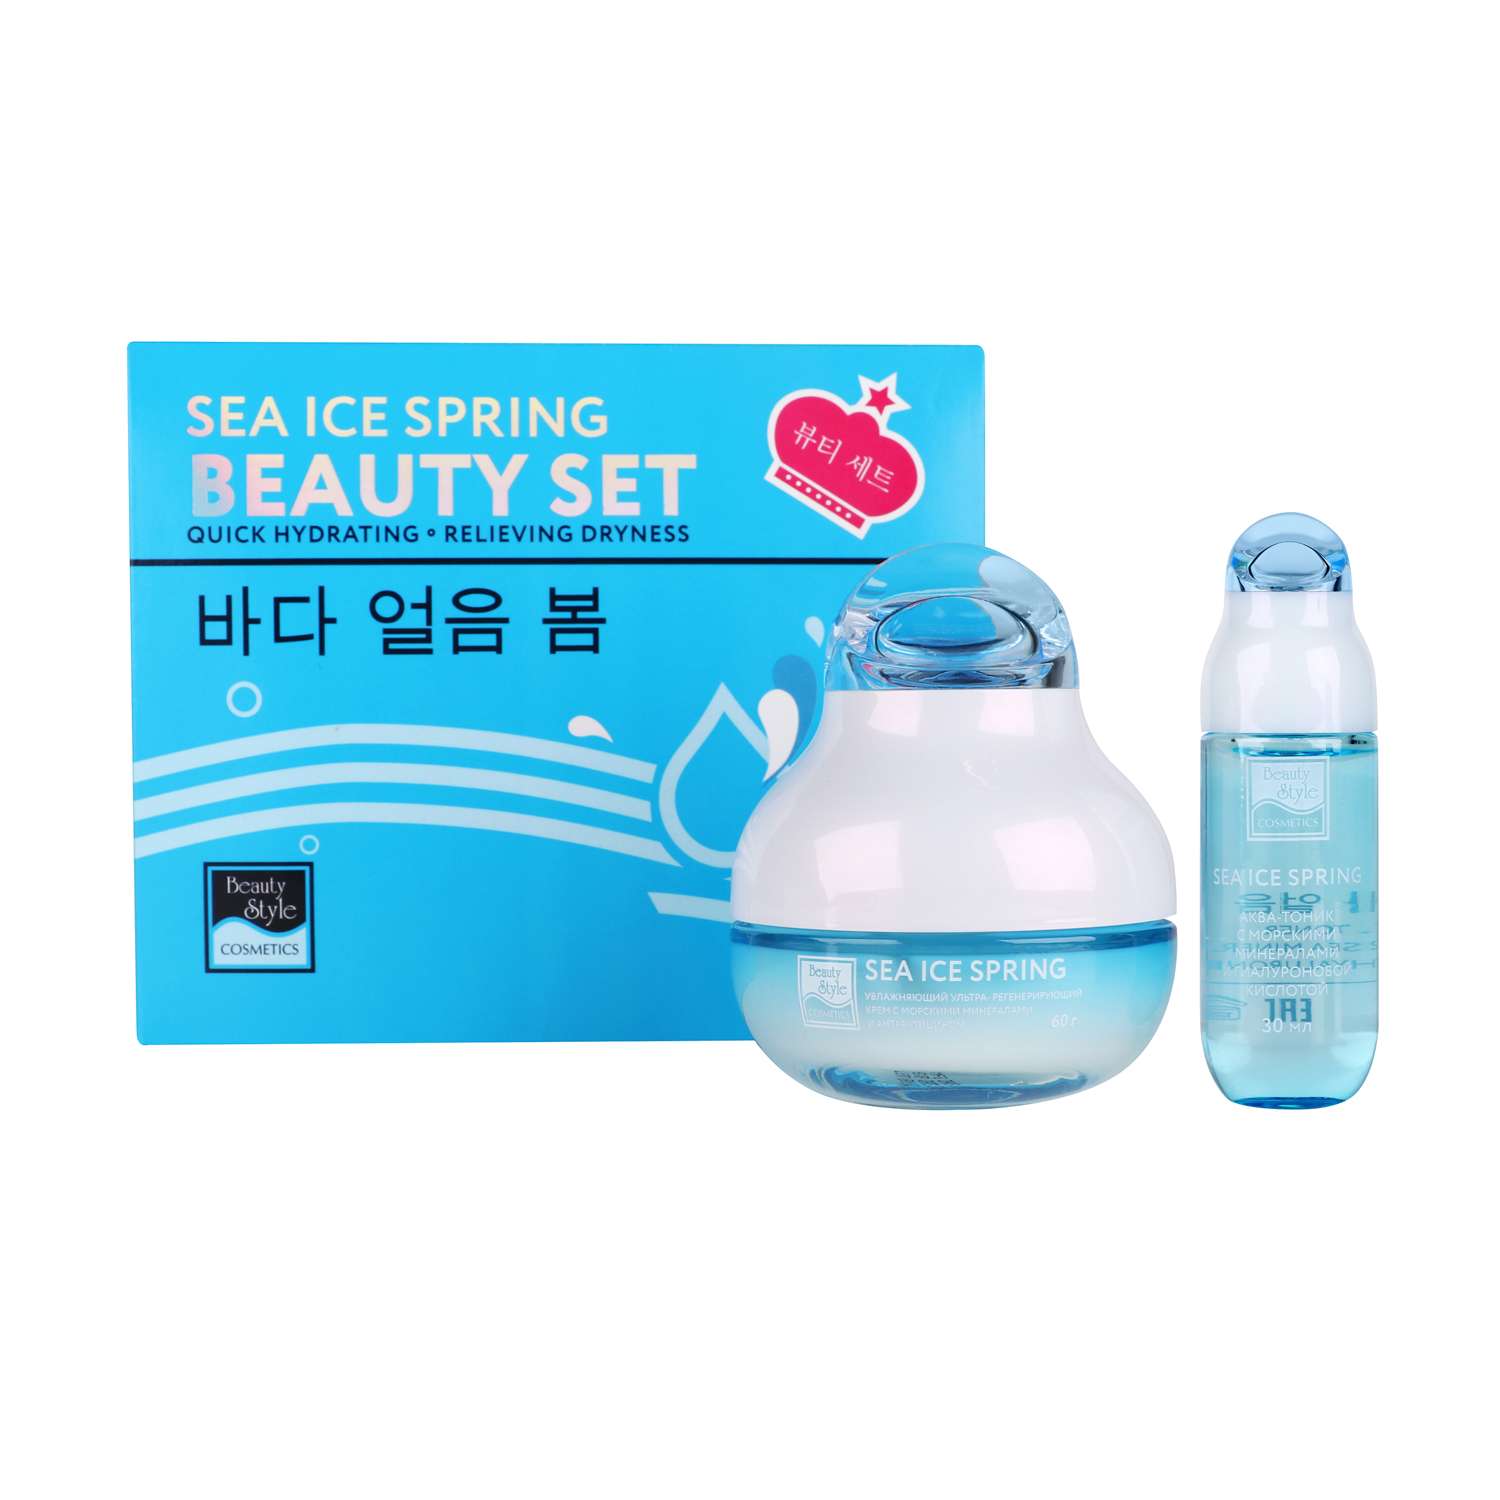 Подарочный набор Beauty Style увлажняющих средств Sea Ice Spring 2 шага - фото 2